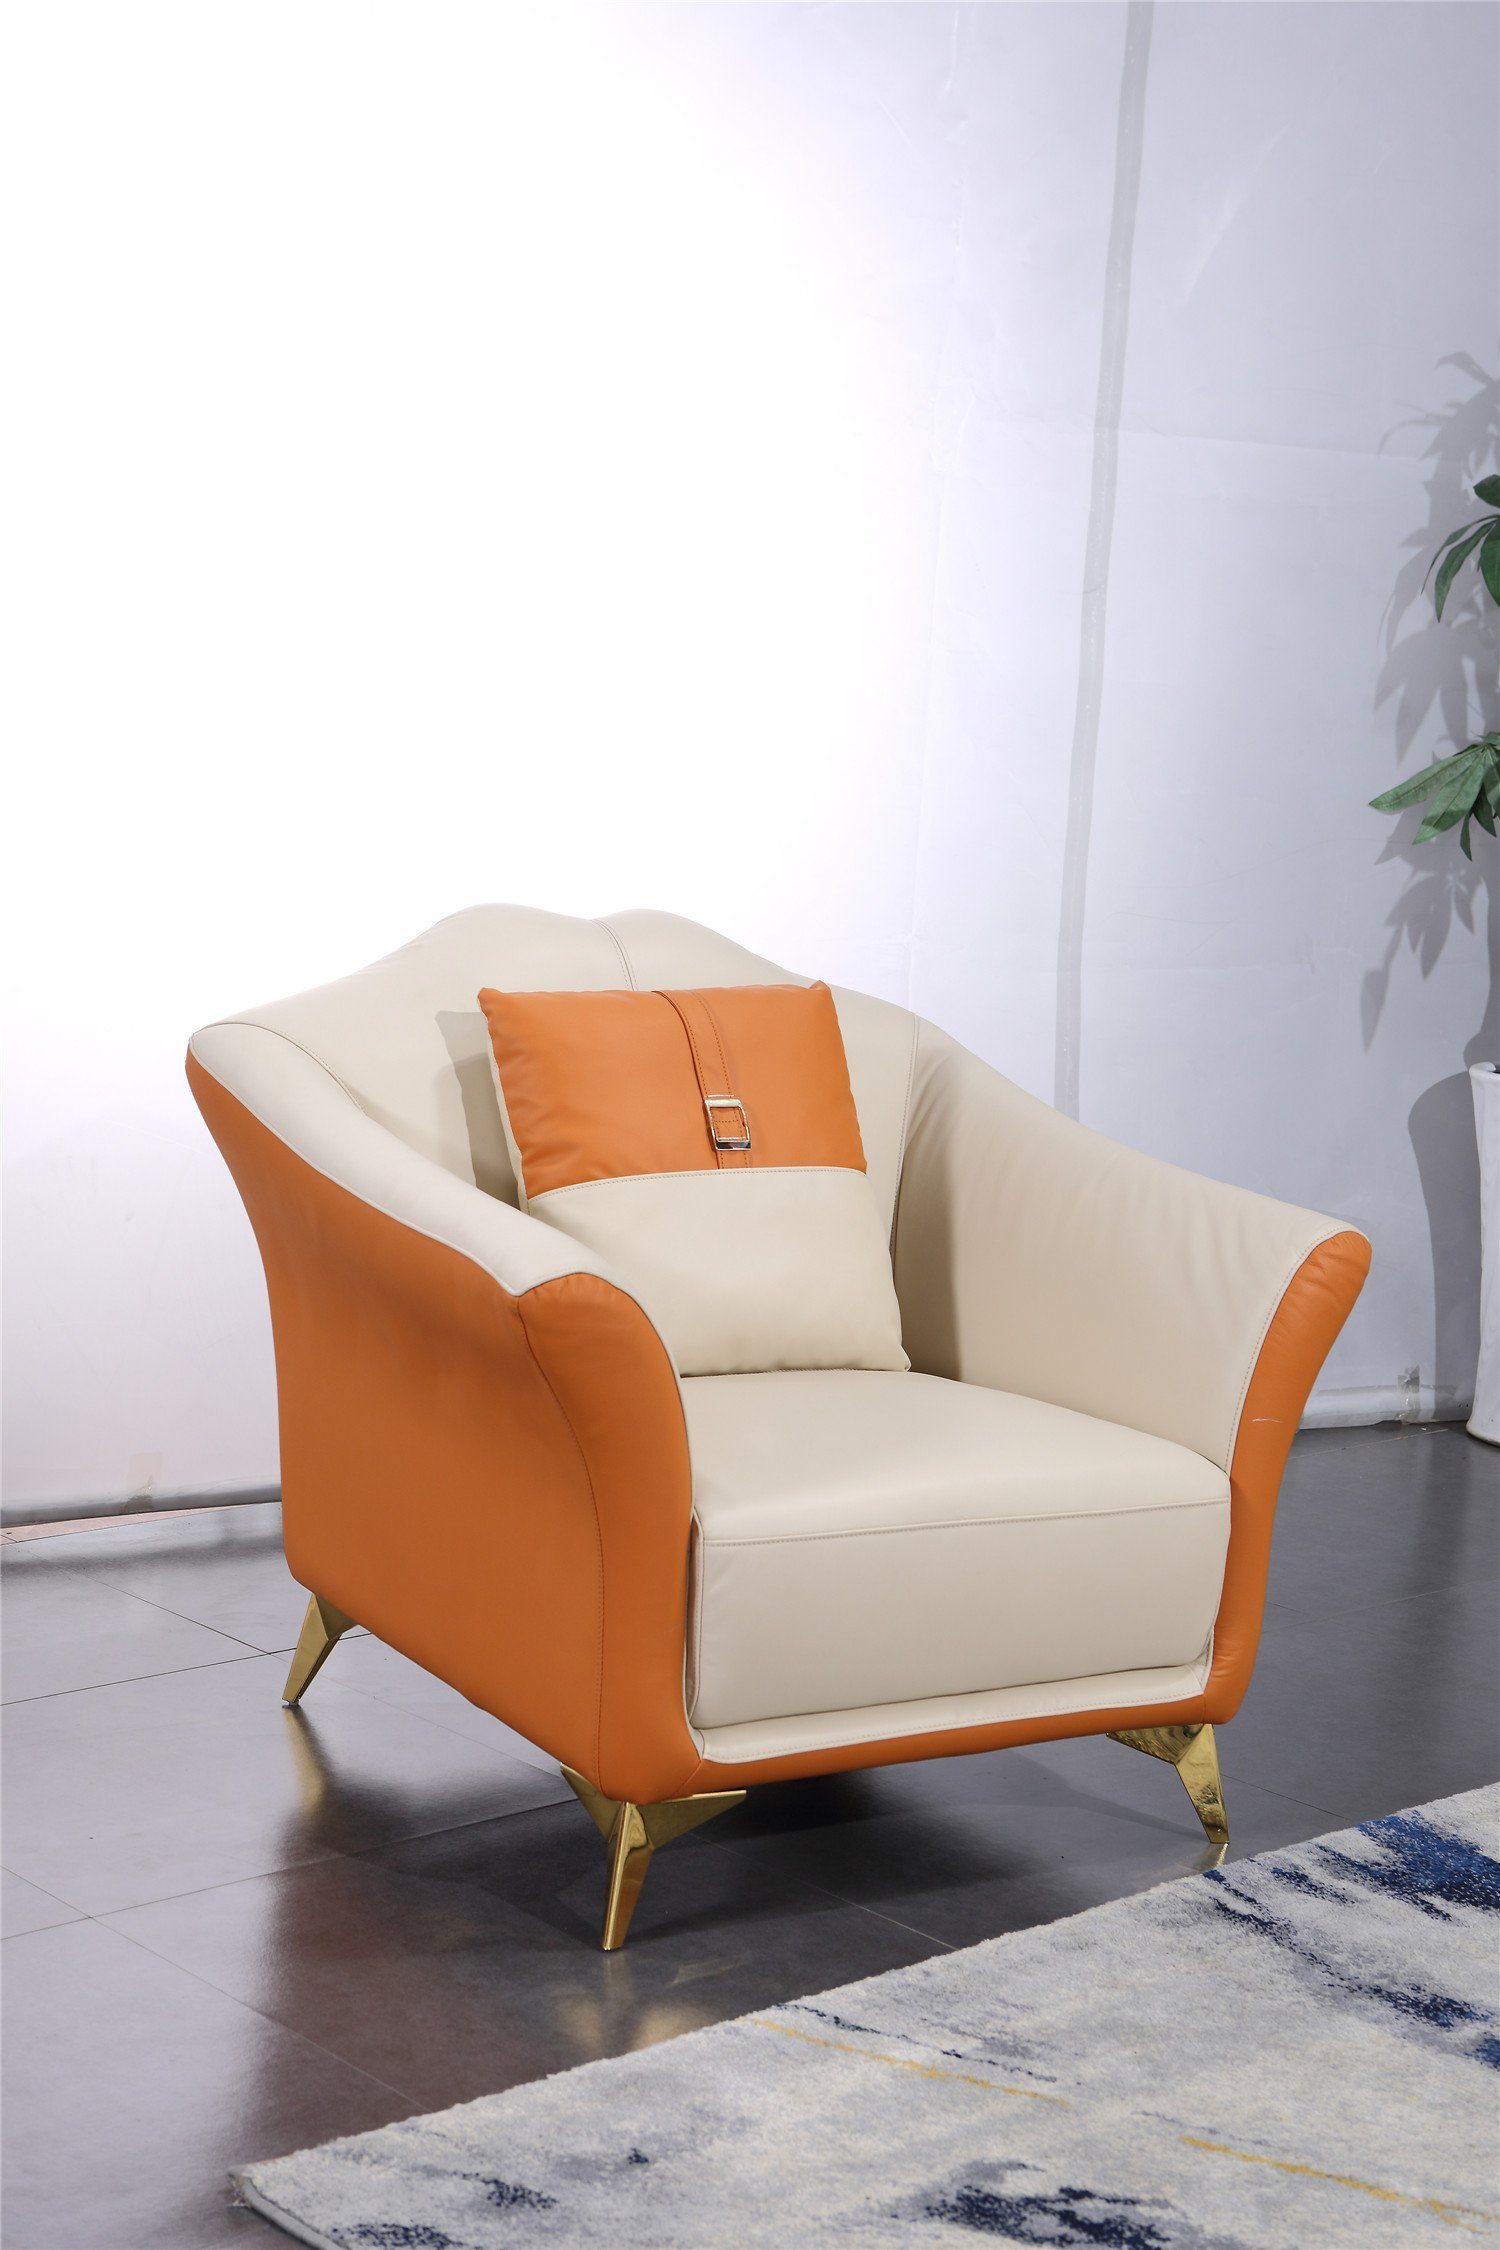 Made in Design Modernes Europe JVmoebel Sofagarnitur Sofa Orange-weiße 3+2+1 Set, Polster